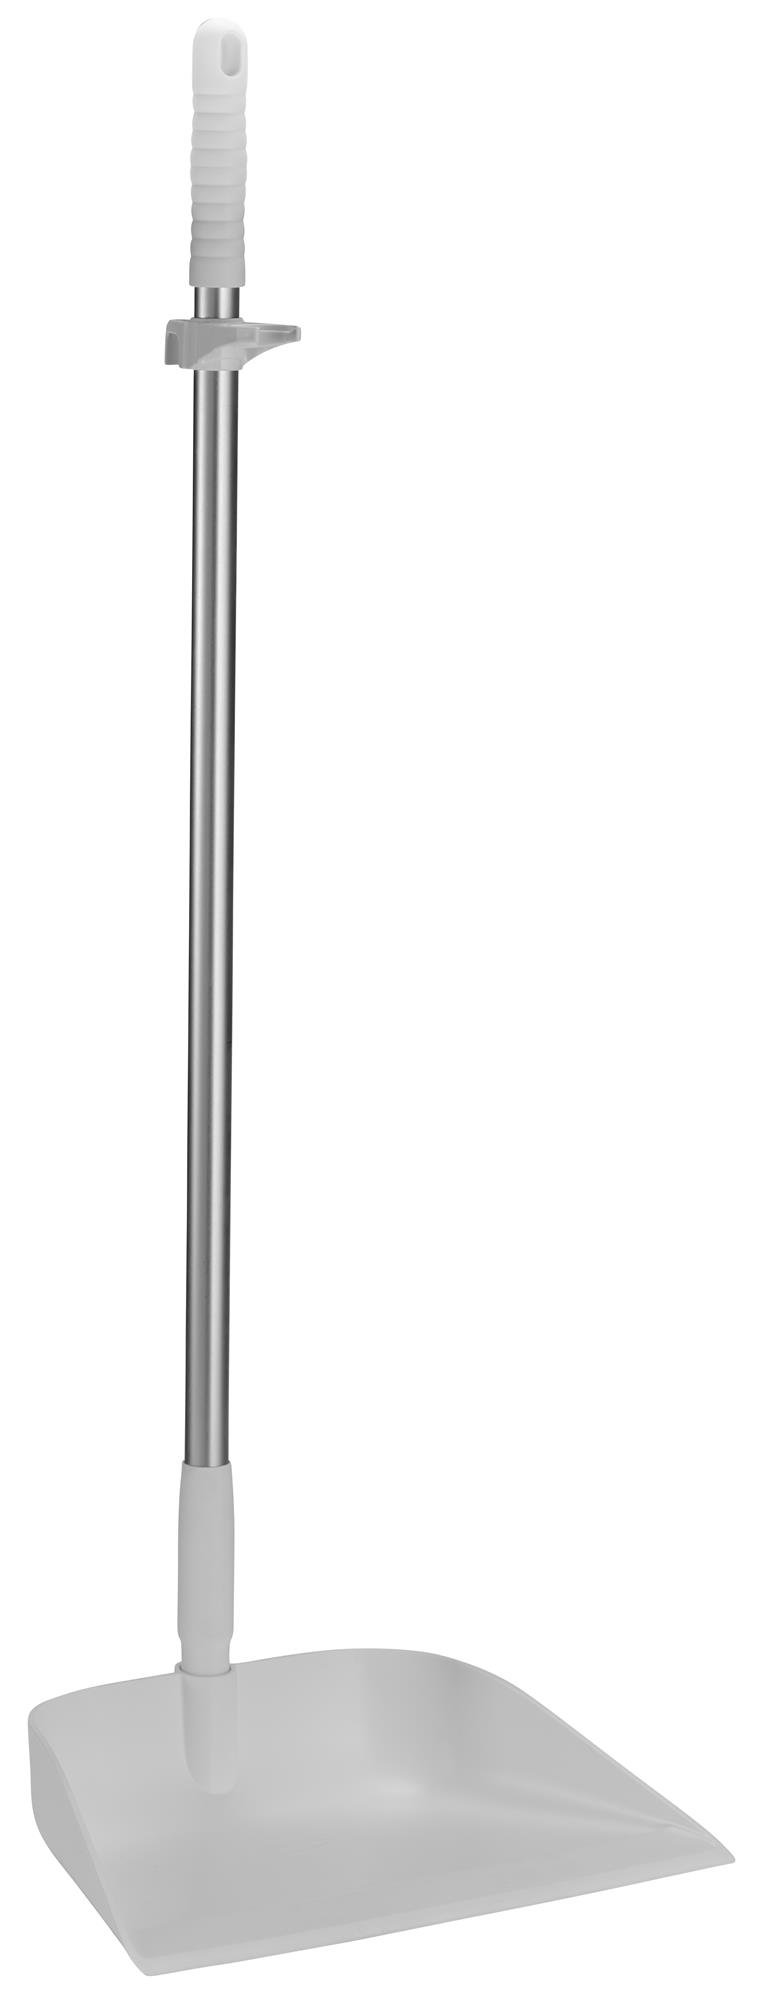 Vikan Kehrschaufel mit langem Stiel, 330 mm